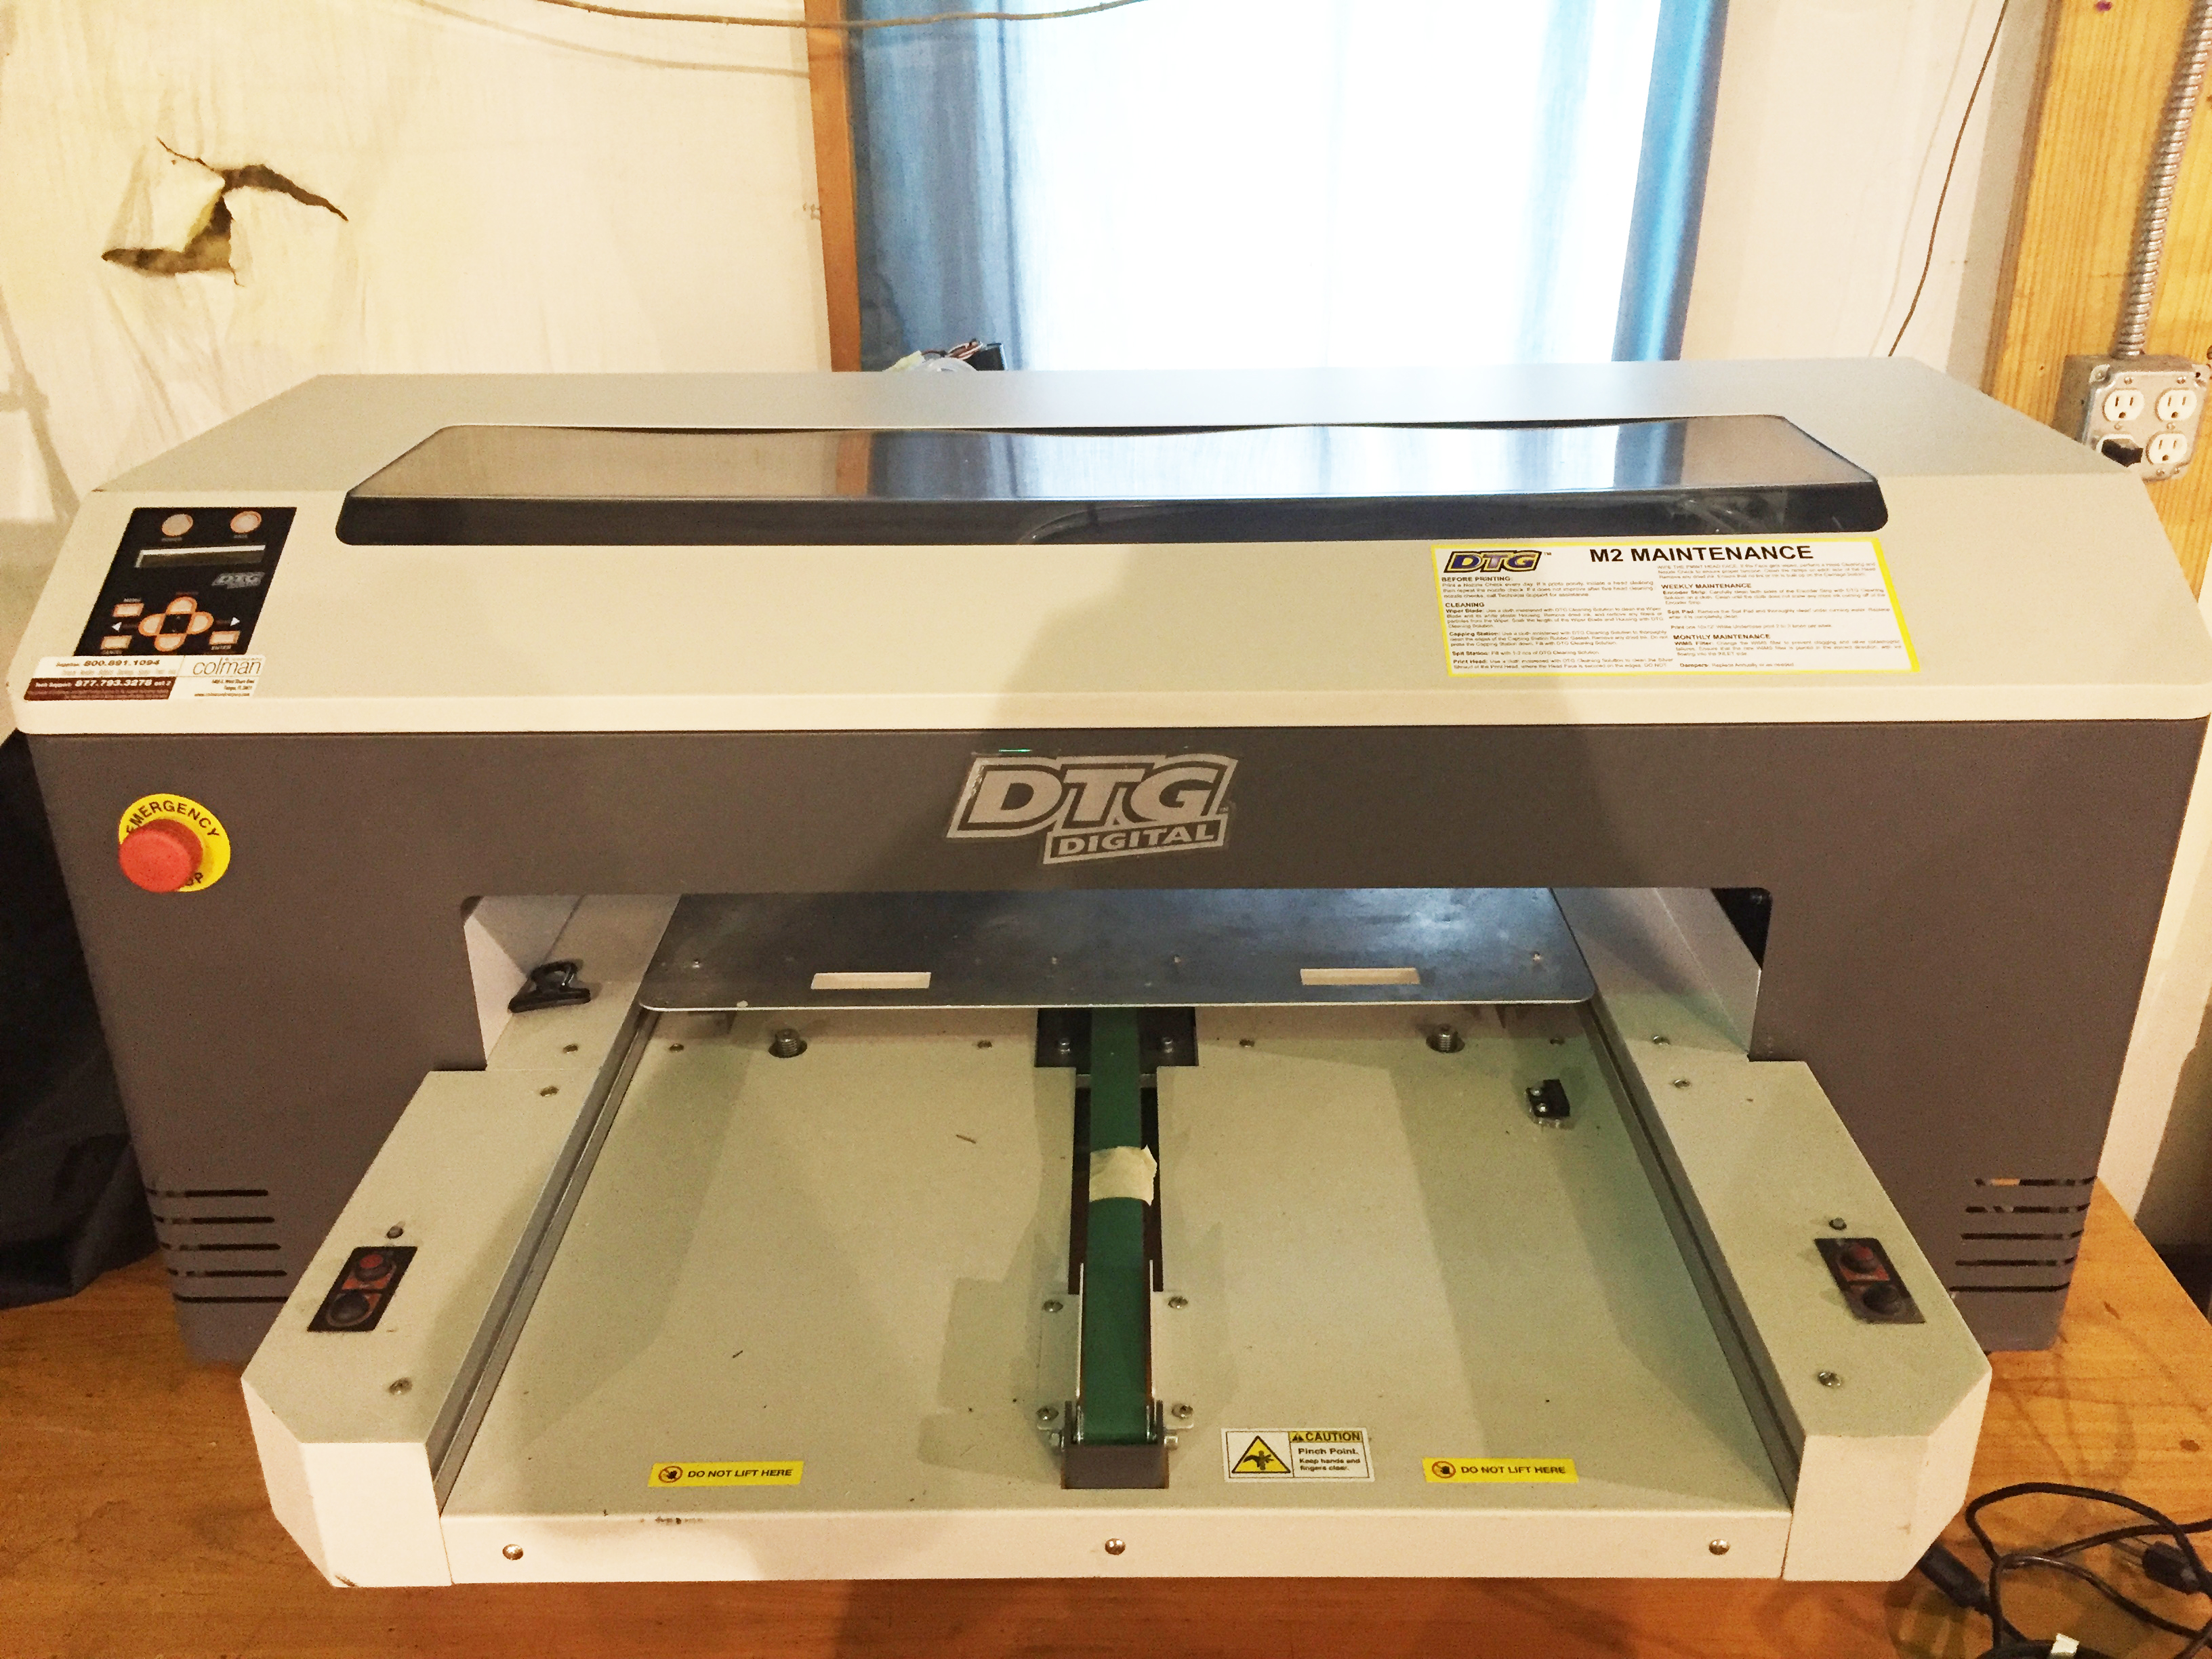 DTG Viper (Direct to Garment Printer)